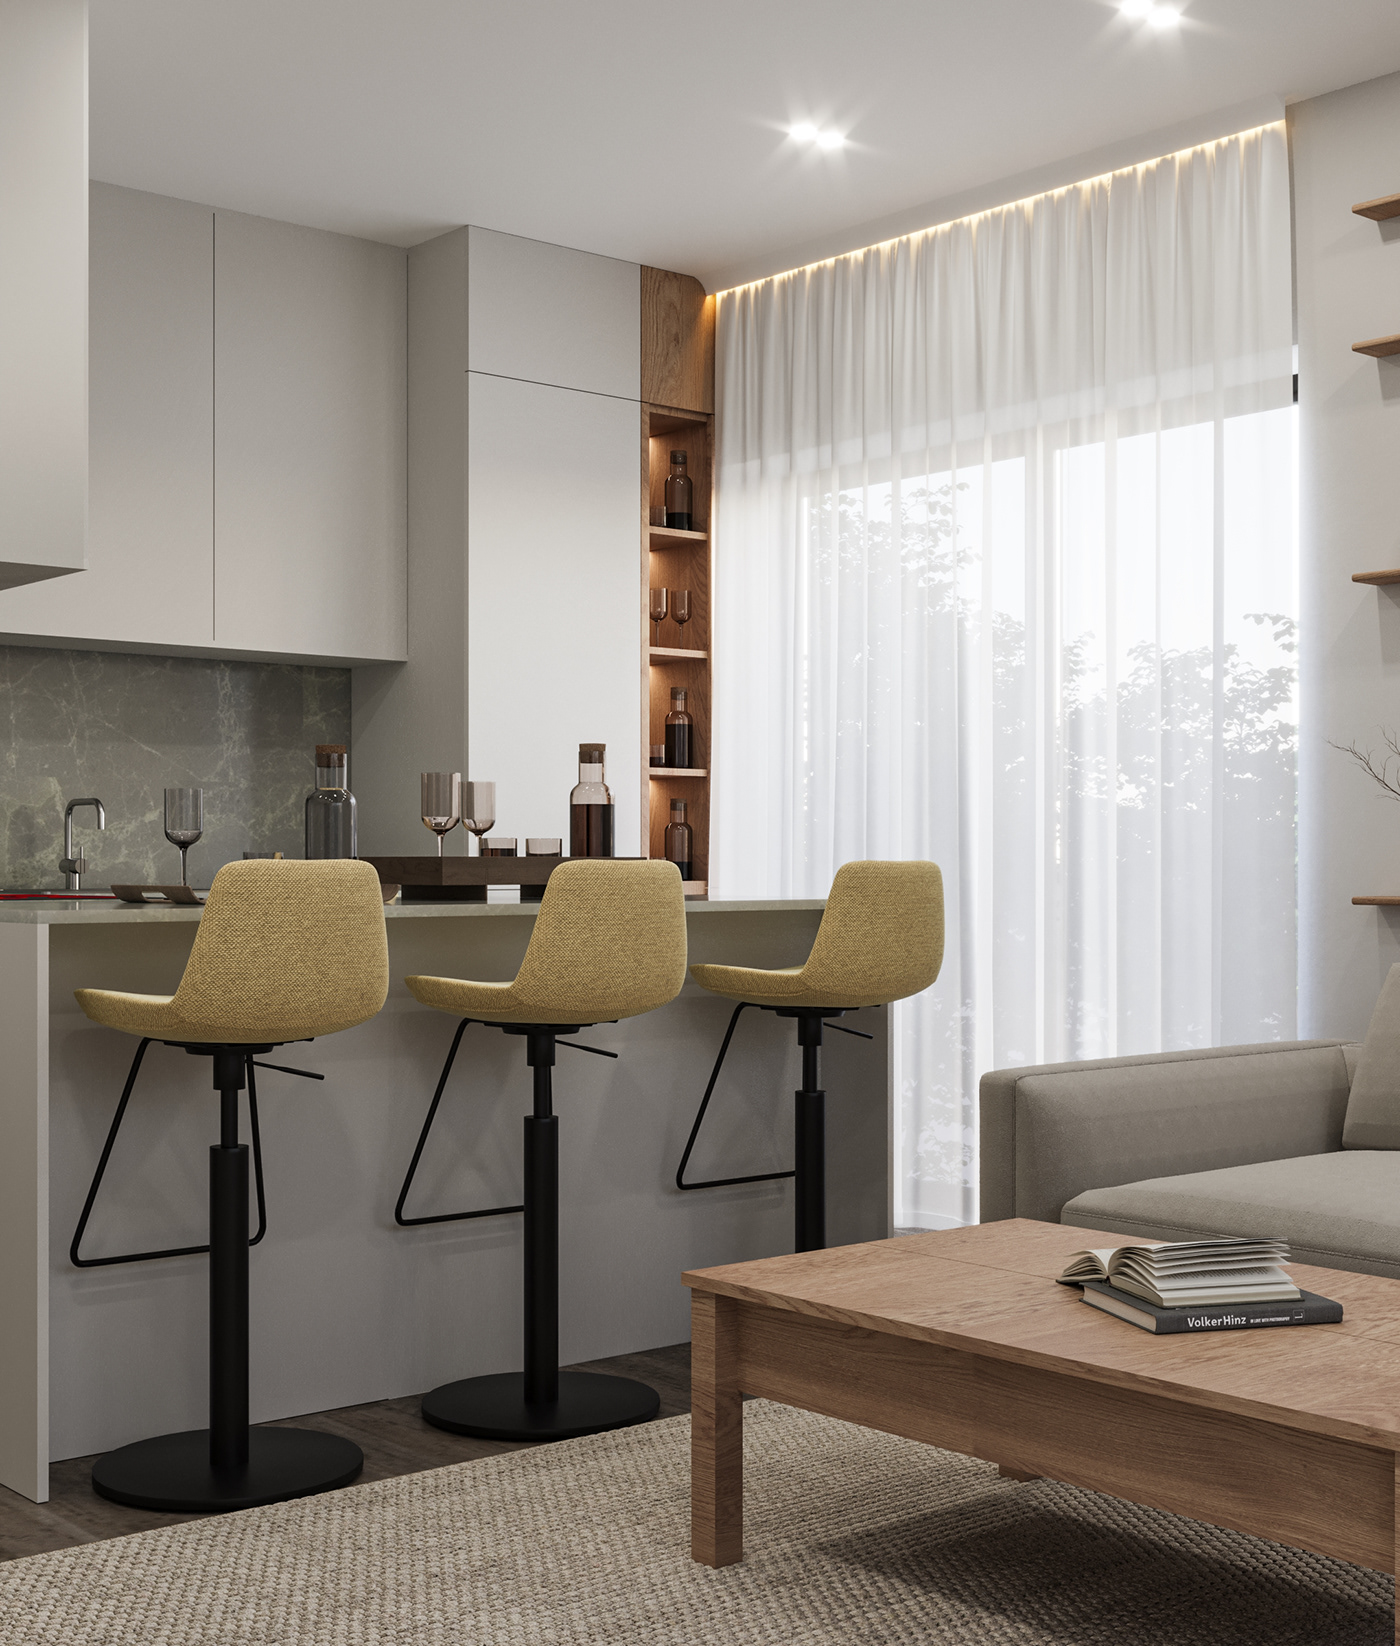 Interior apartment smallapartment functional bright clean design minimal simple modern